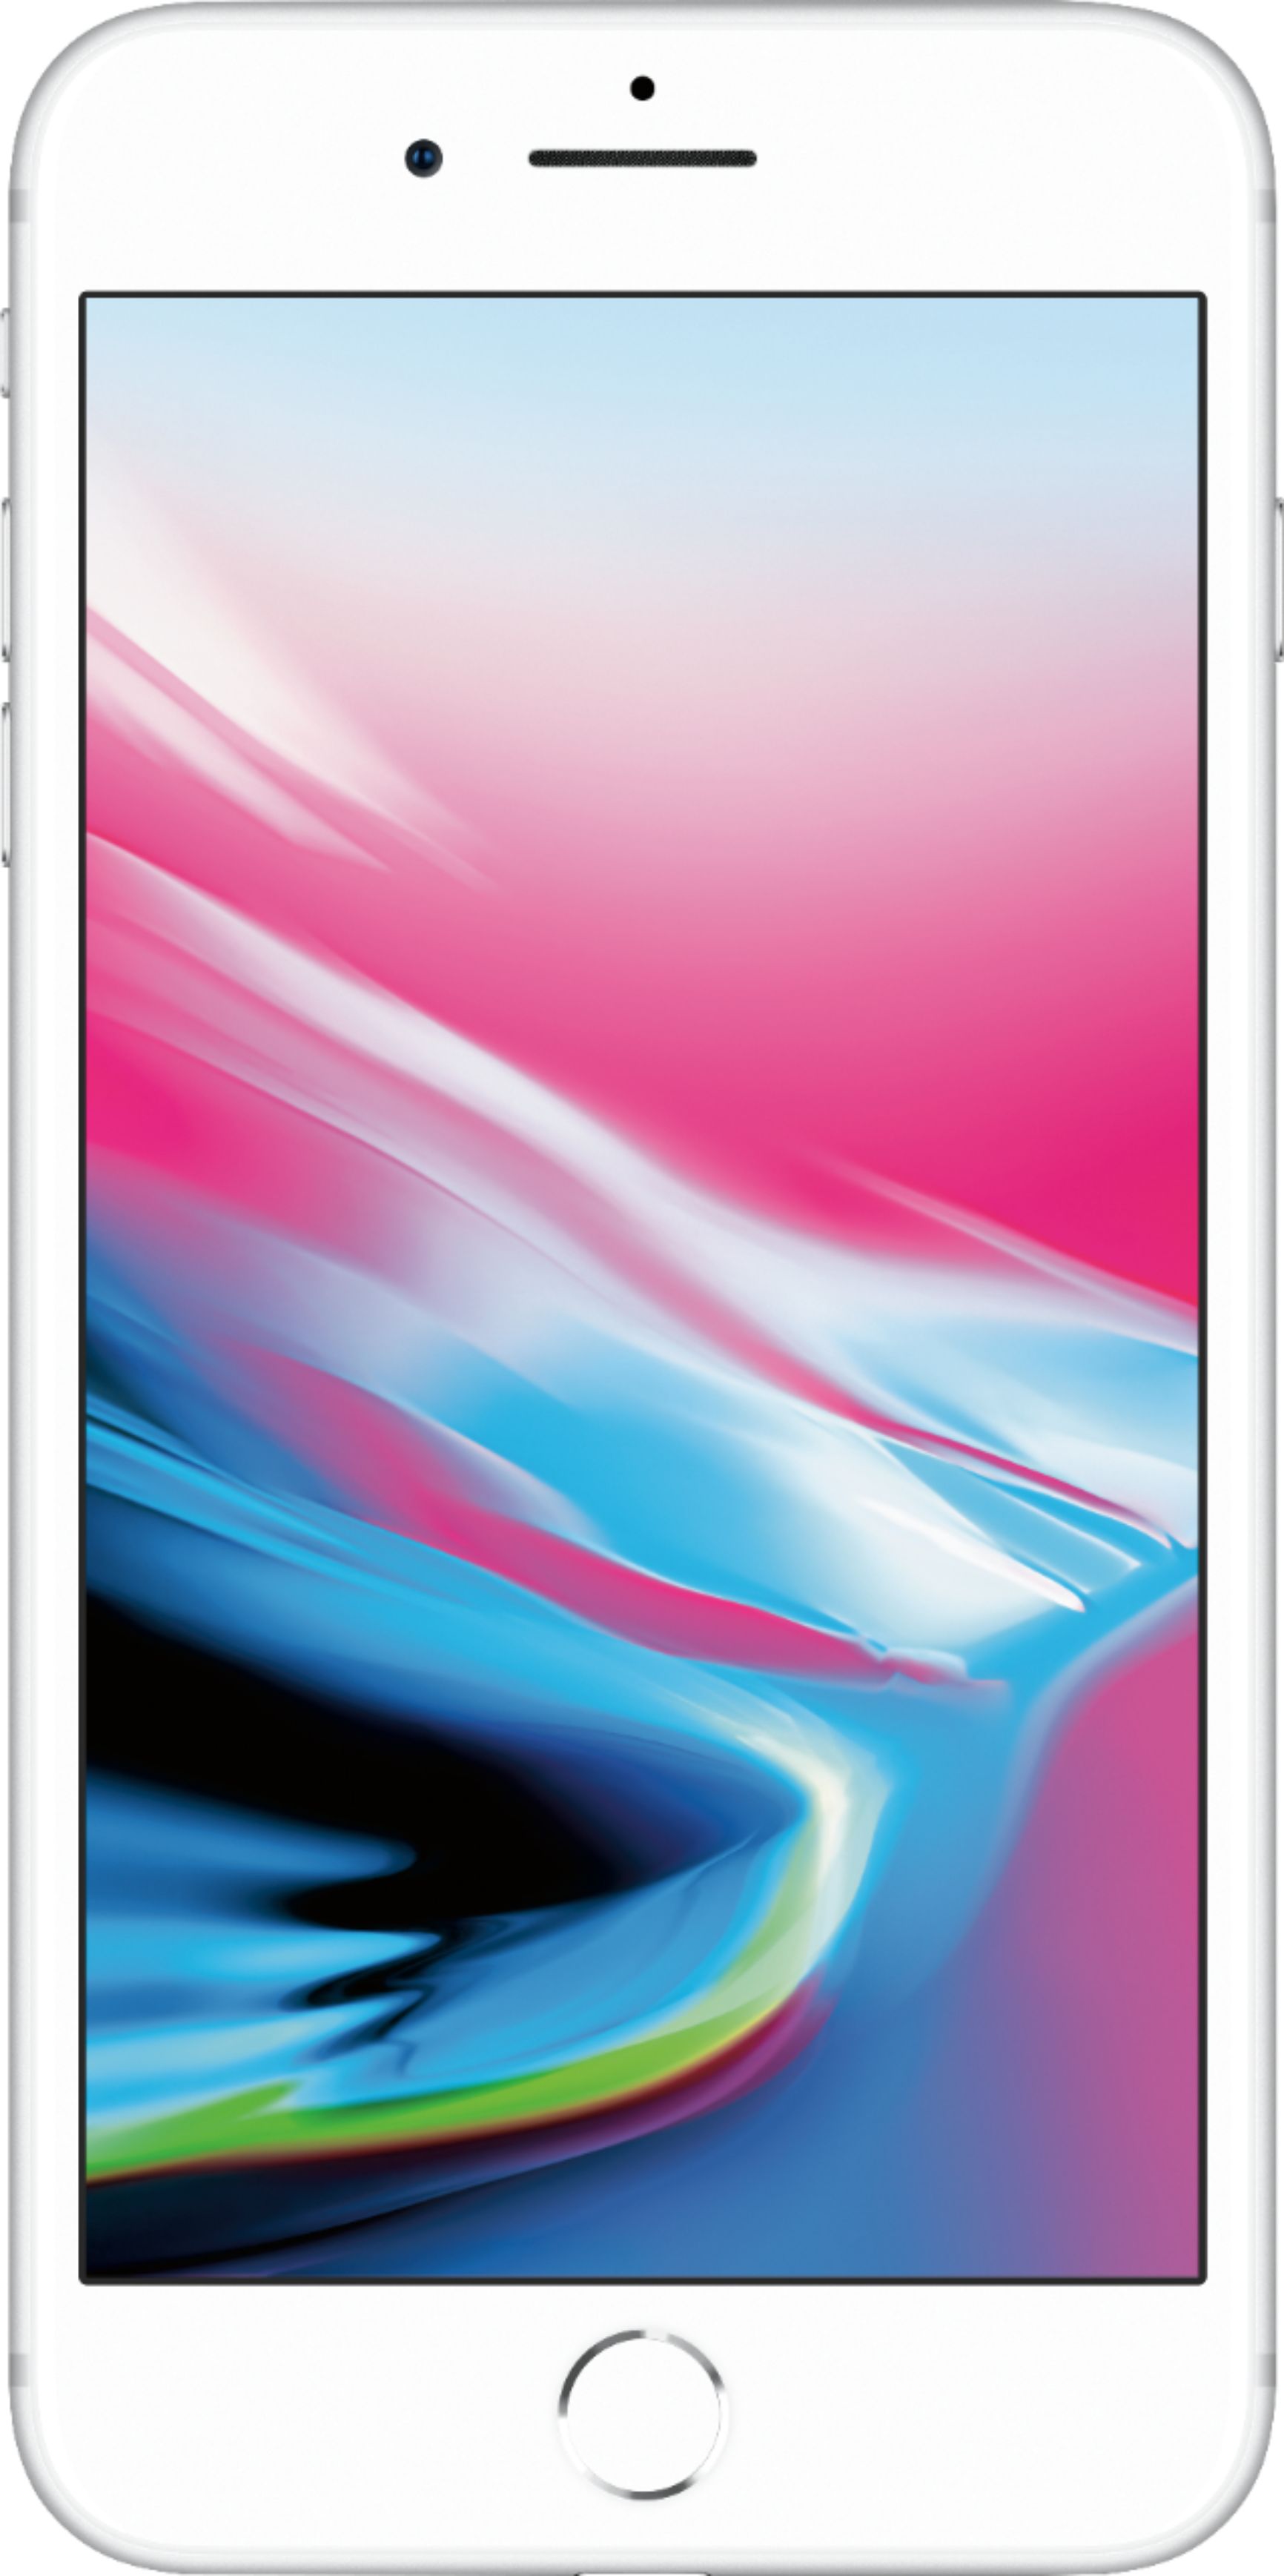 önlemek Milimetre Ulusal Bayrak  Customer Reviews: Apple iPhone 8 Plus 64GB Silver MQ8E2LL/A - Best Buy